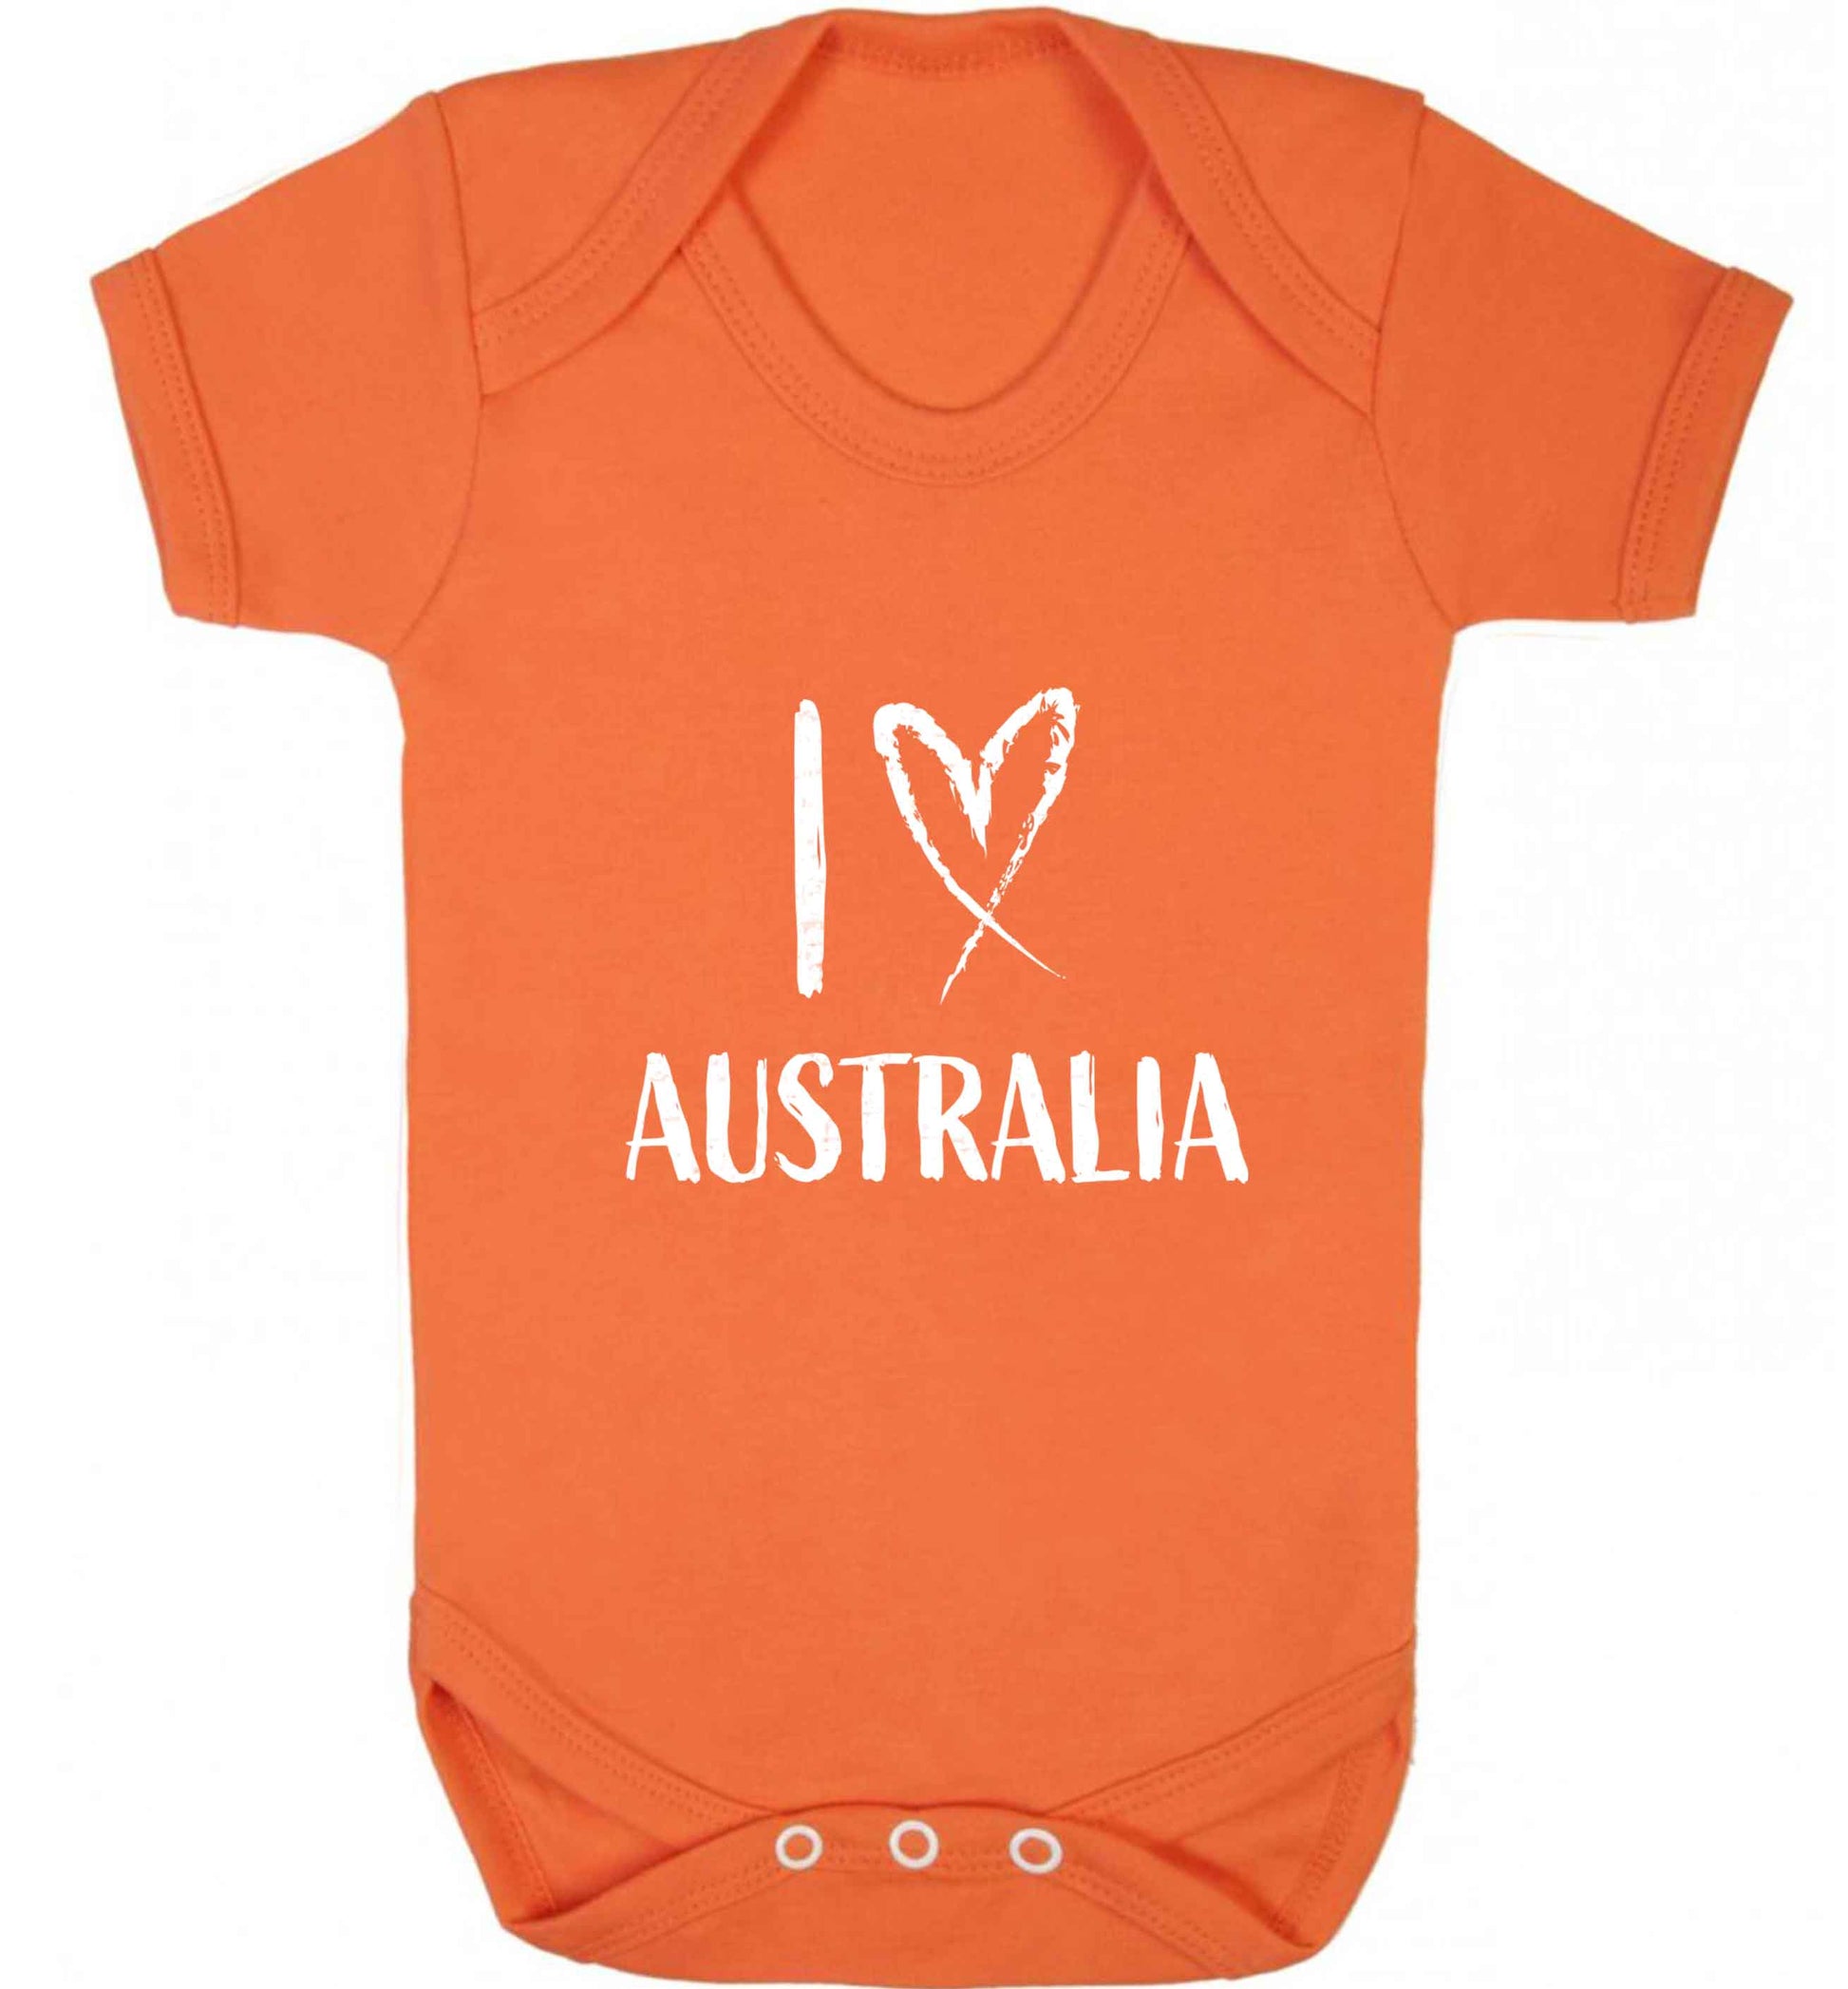 I Love Australia baby vest orange 18-24 months